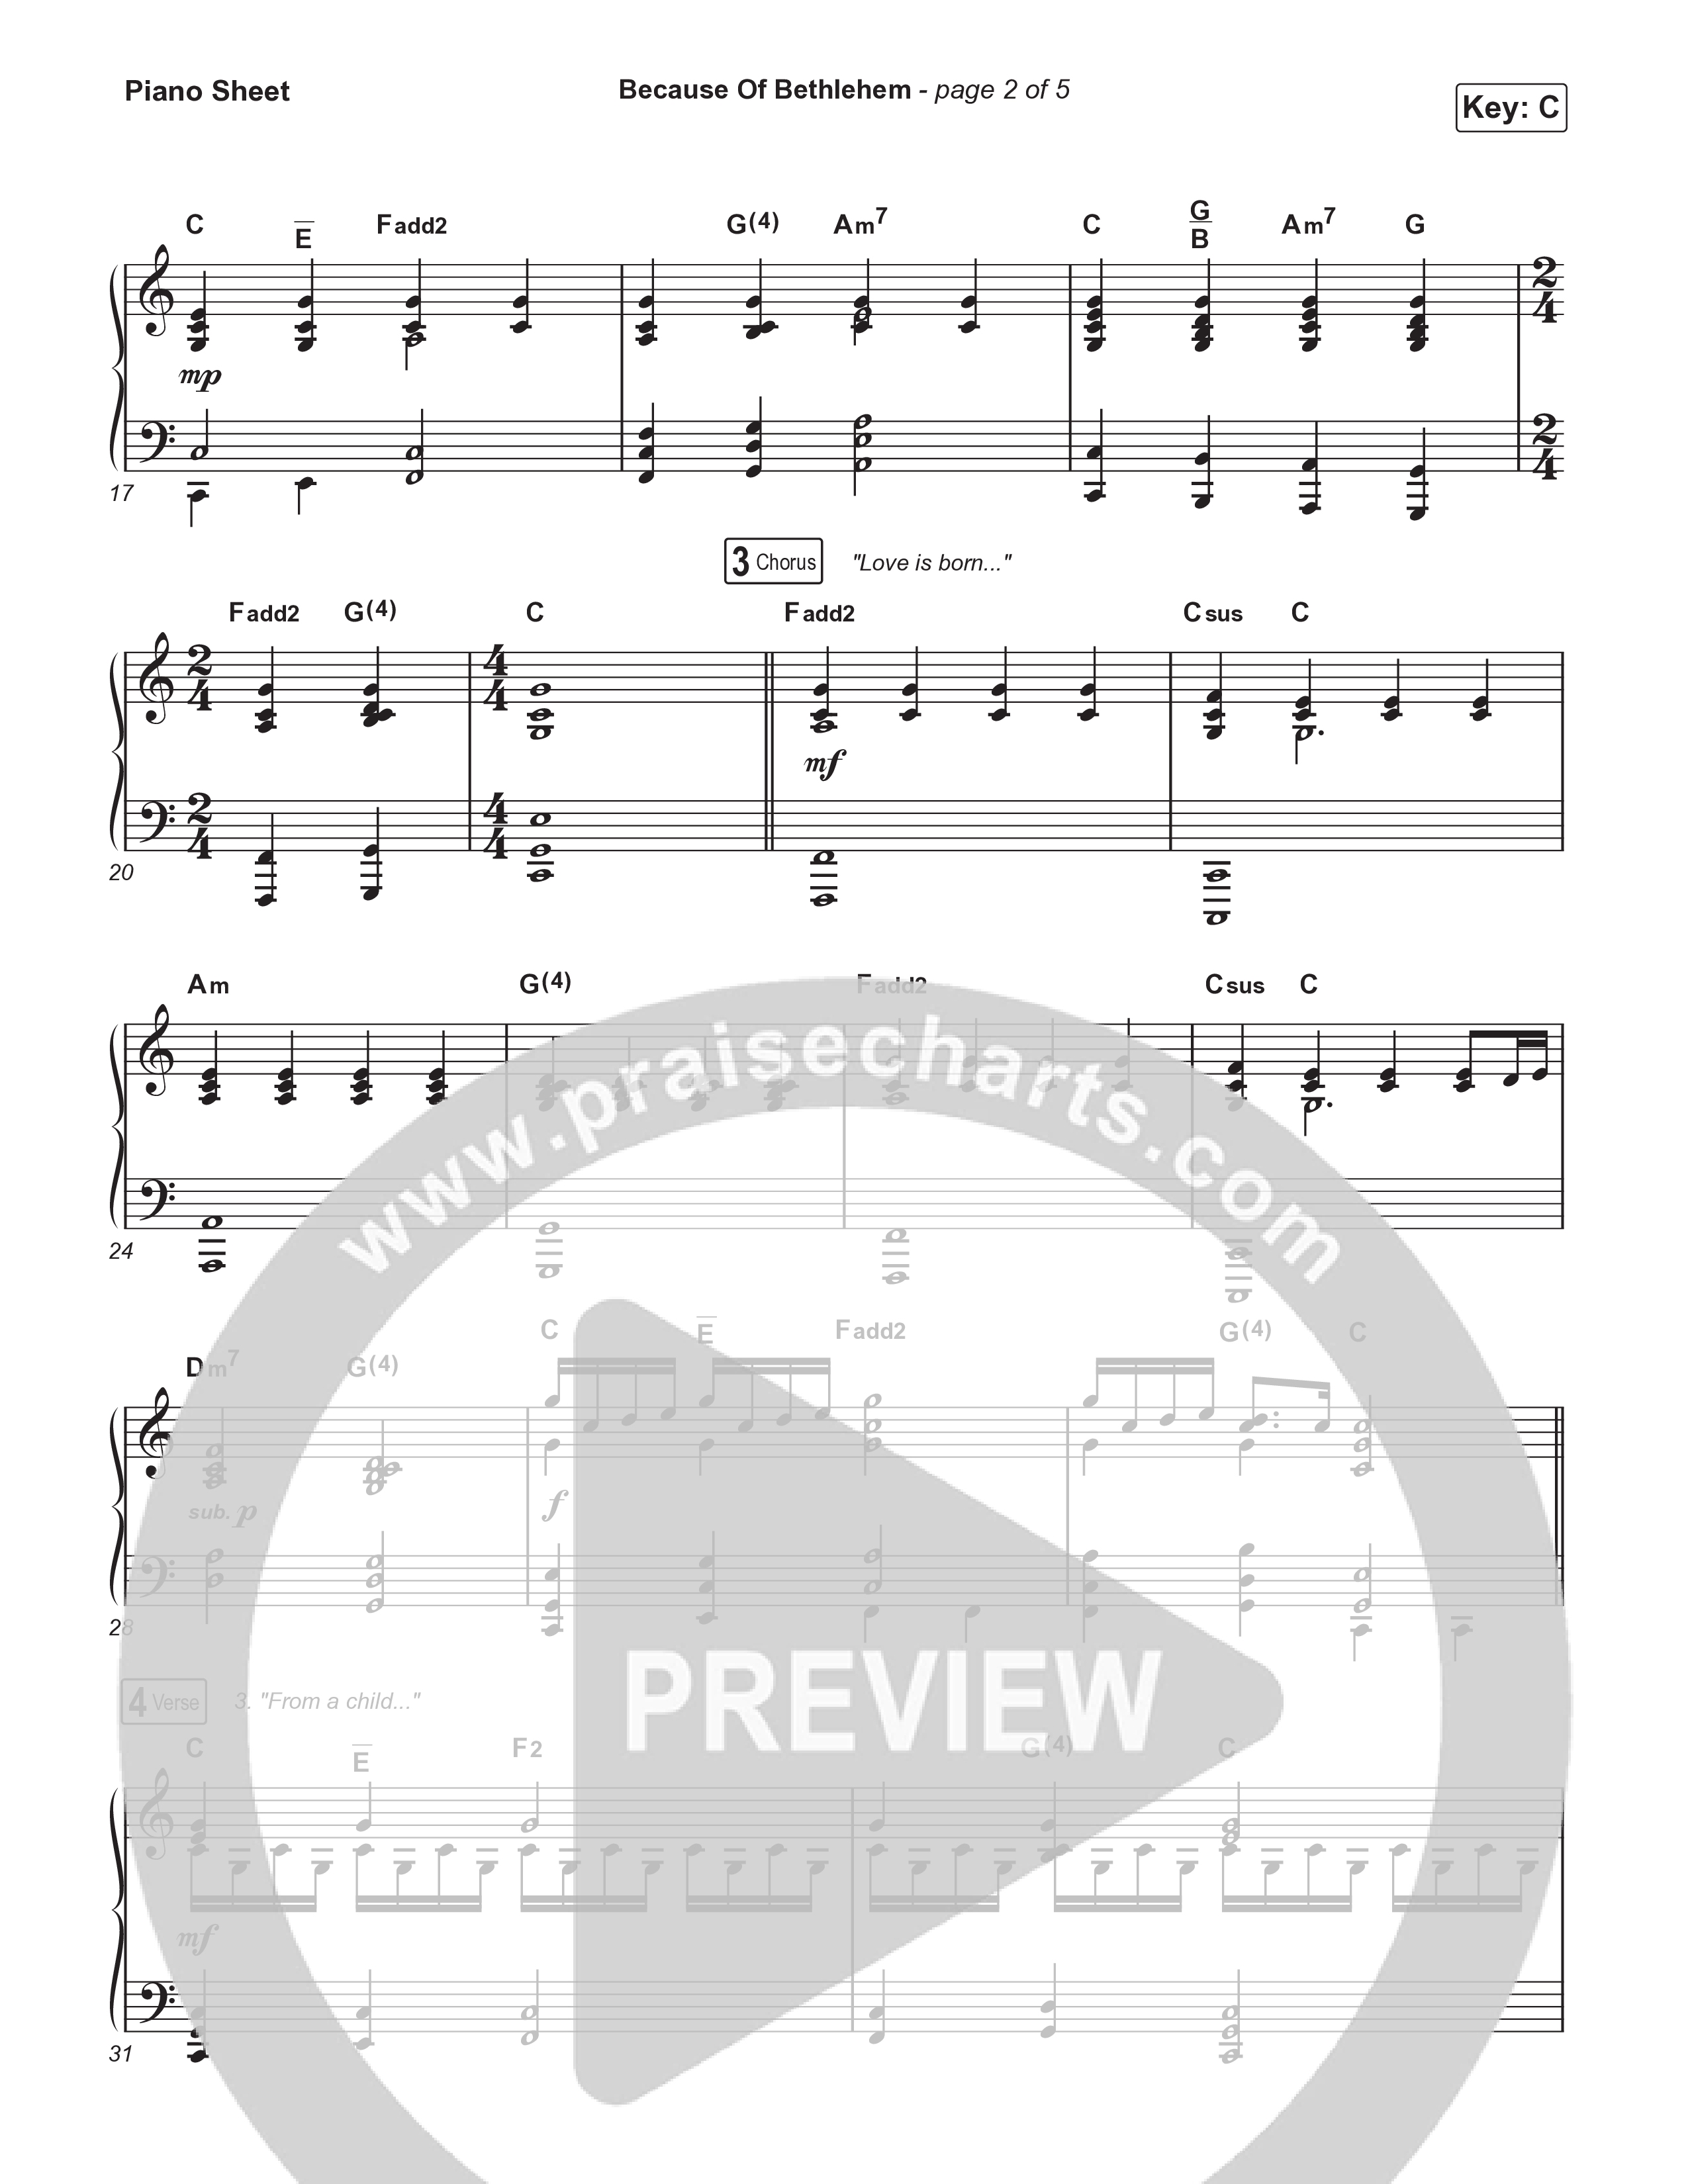 Because Of Bethlehem (Sing It Now) Piano Sheet (Matthew West / Arr. Luke Gambill)